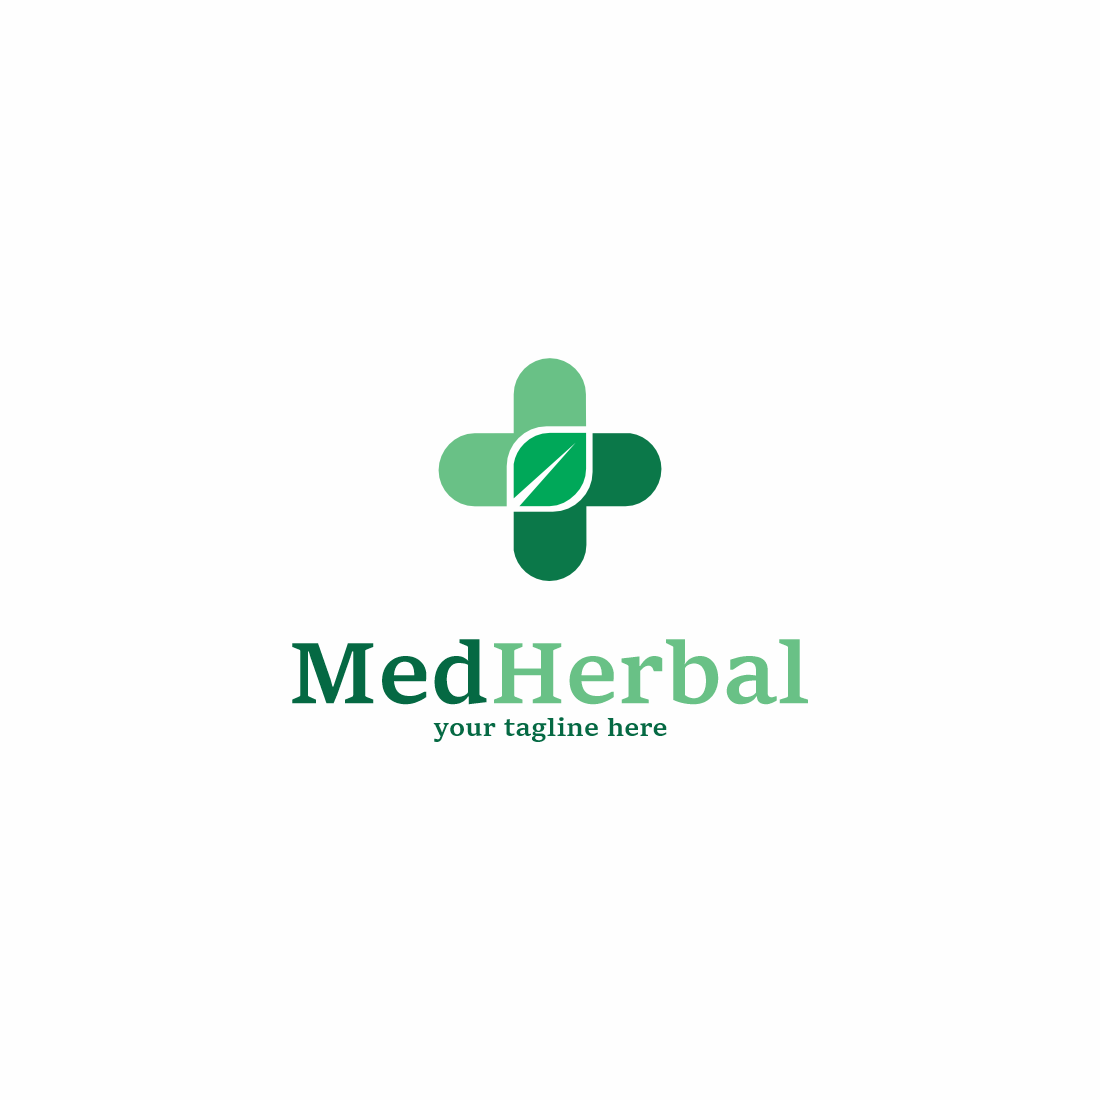 Natural Medical Logo preview image.